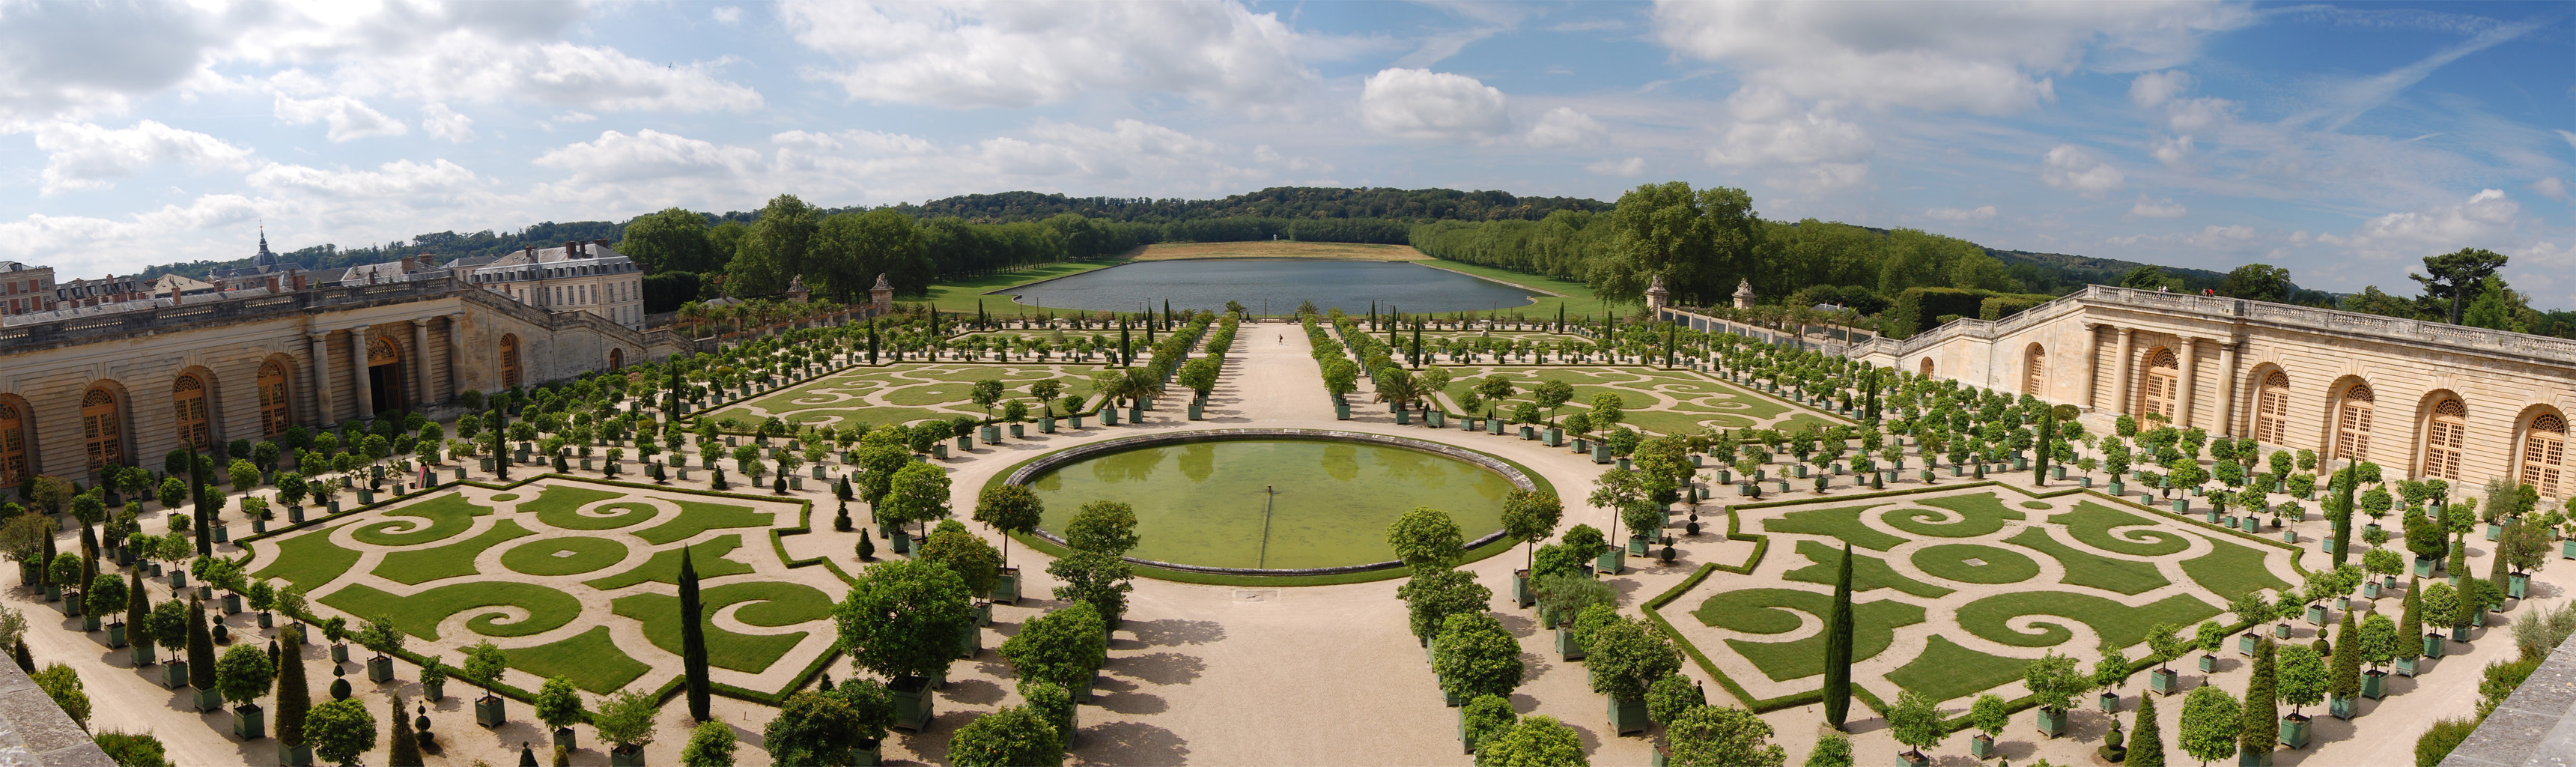 Panorama of Orangery at Versailles.